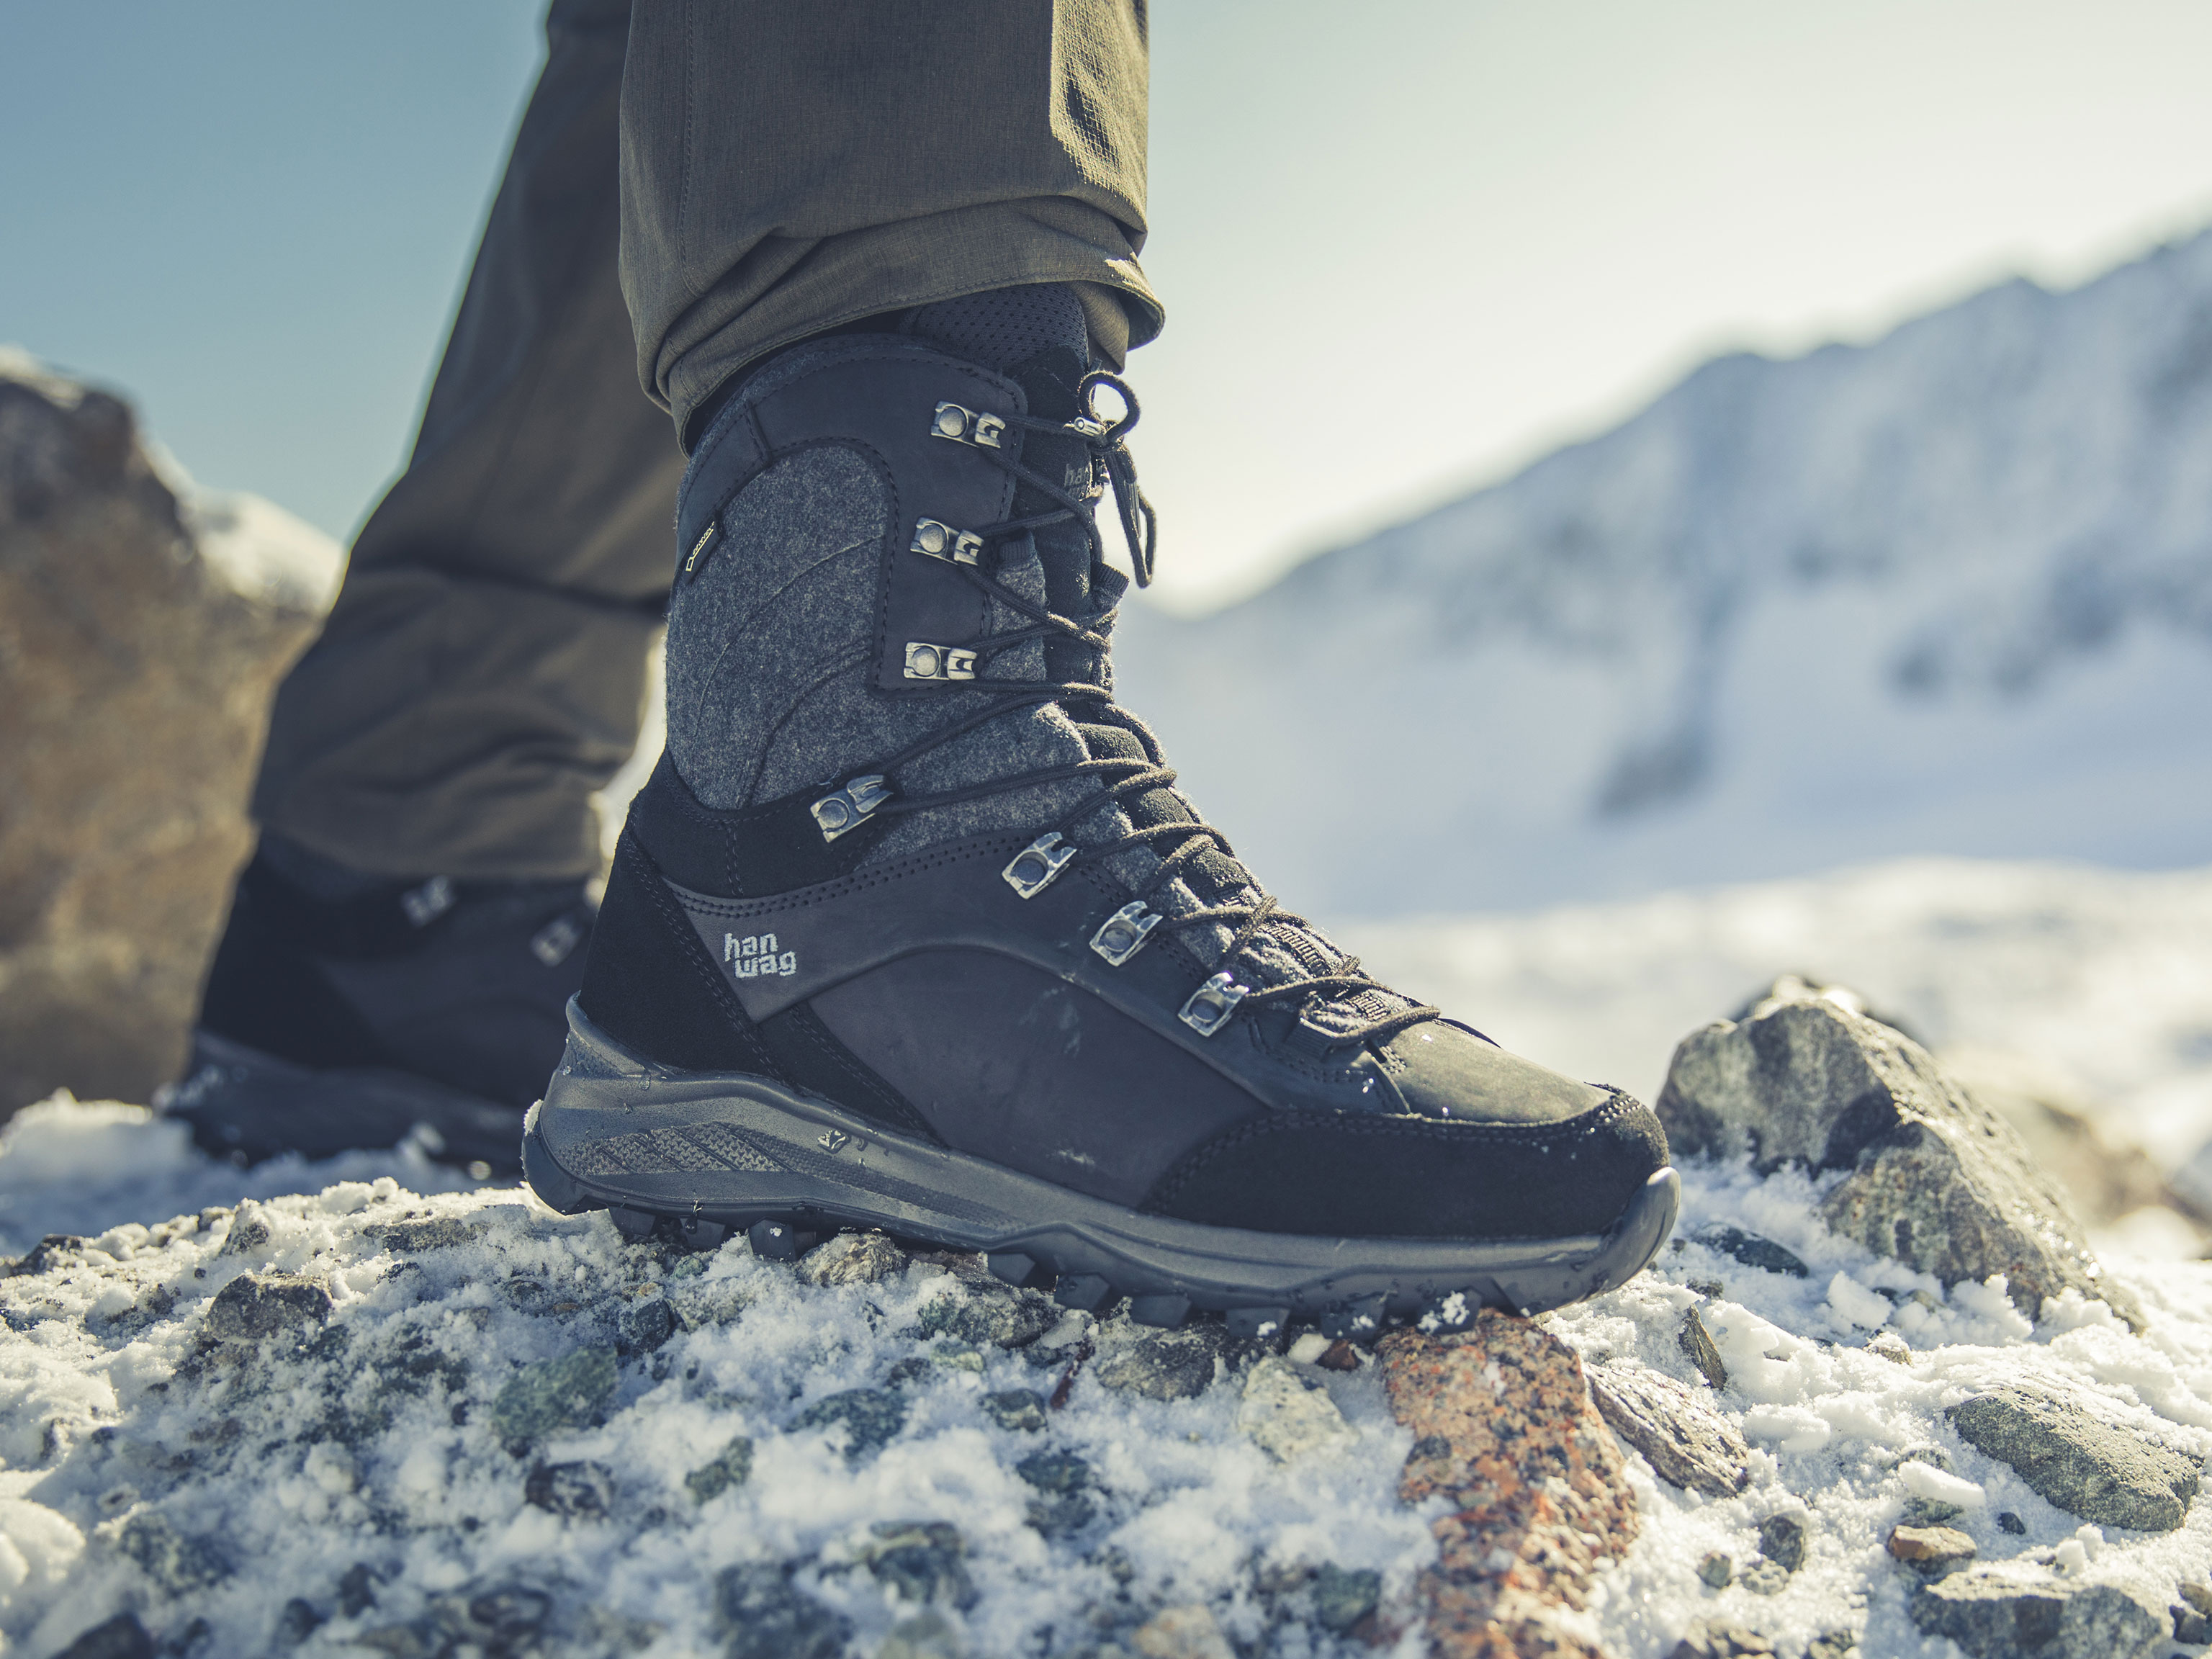 The HANWAG Banks Snow GTX winter hiking boot on snowy rocks